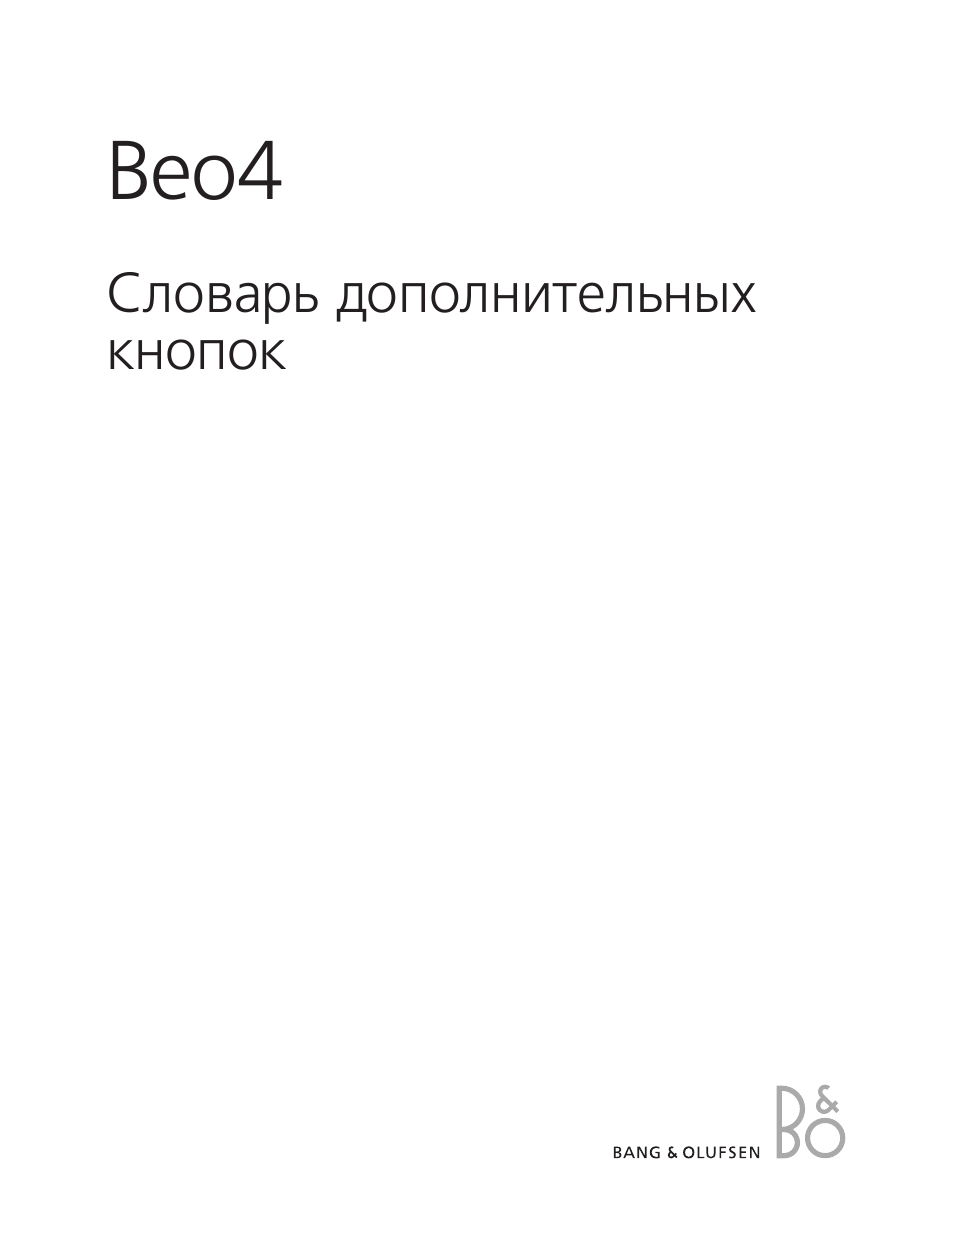 Инструкция по эксплуатации Bang & Olufsen Beo4 (w/o navigation button) - Lexicon | 6 страниц